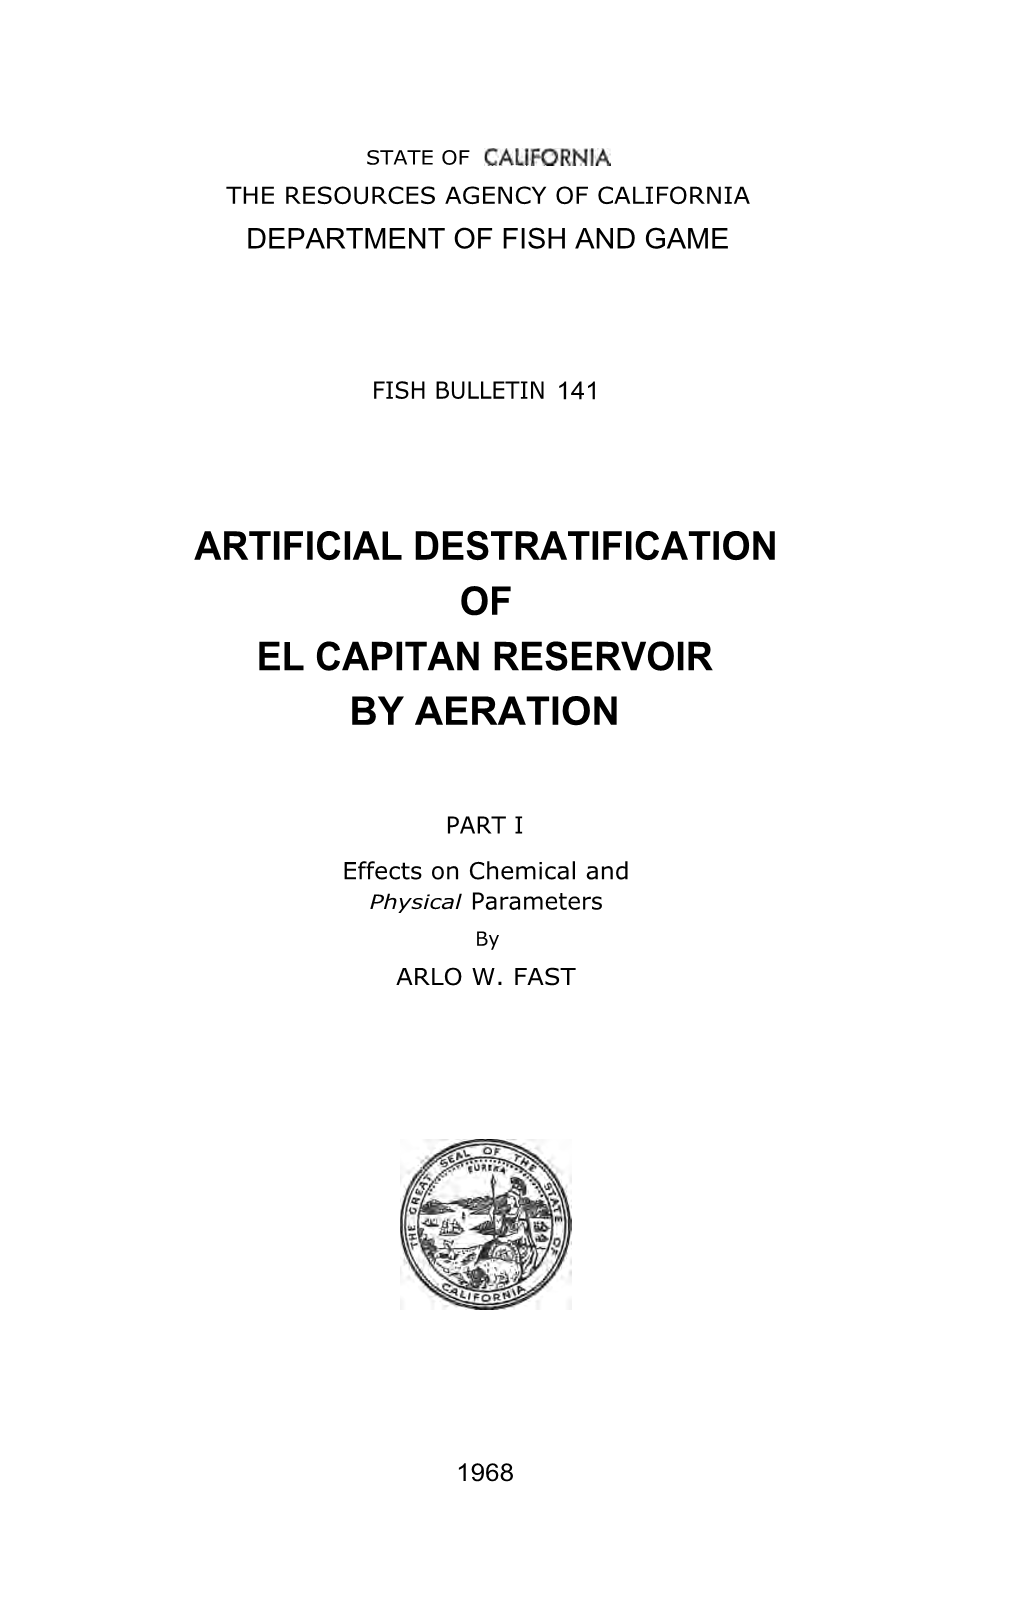 Artificial Destratification of El Capitan Reservoir by Aeration